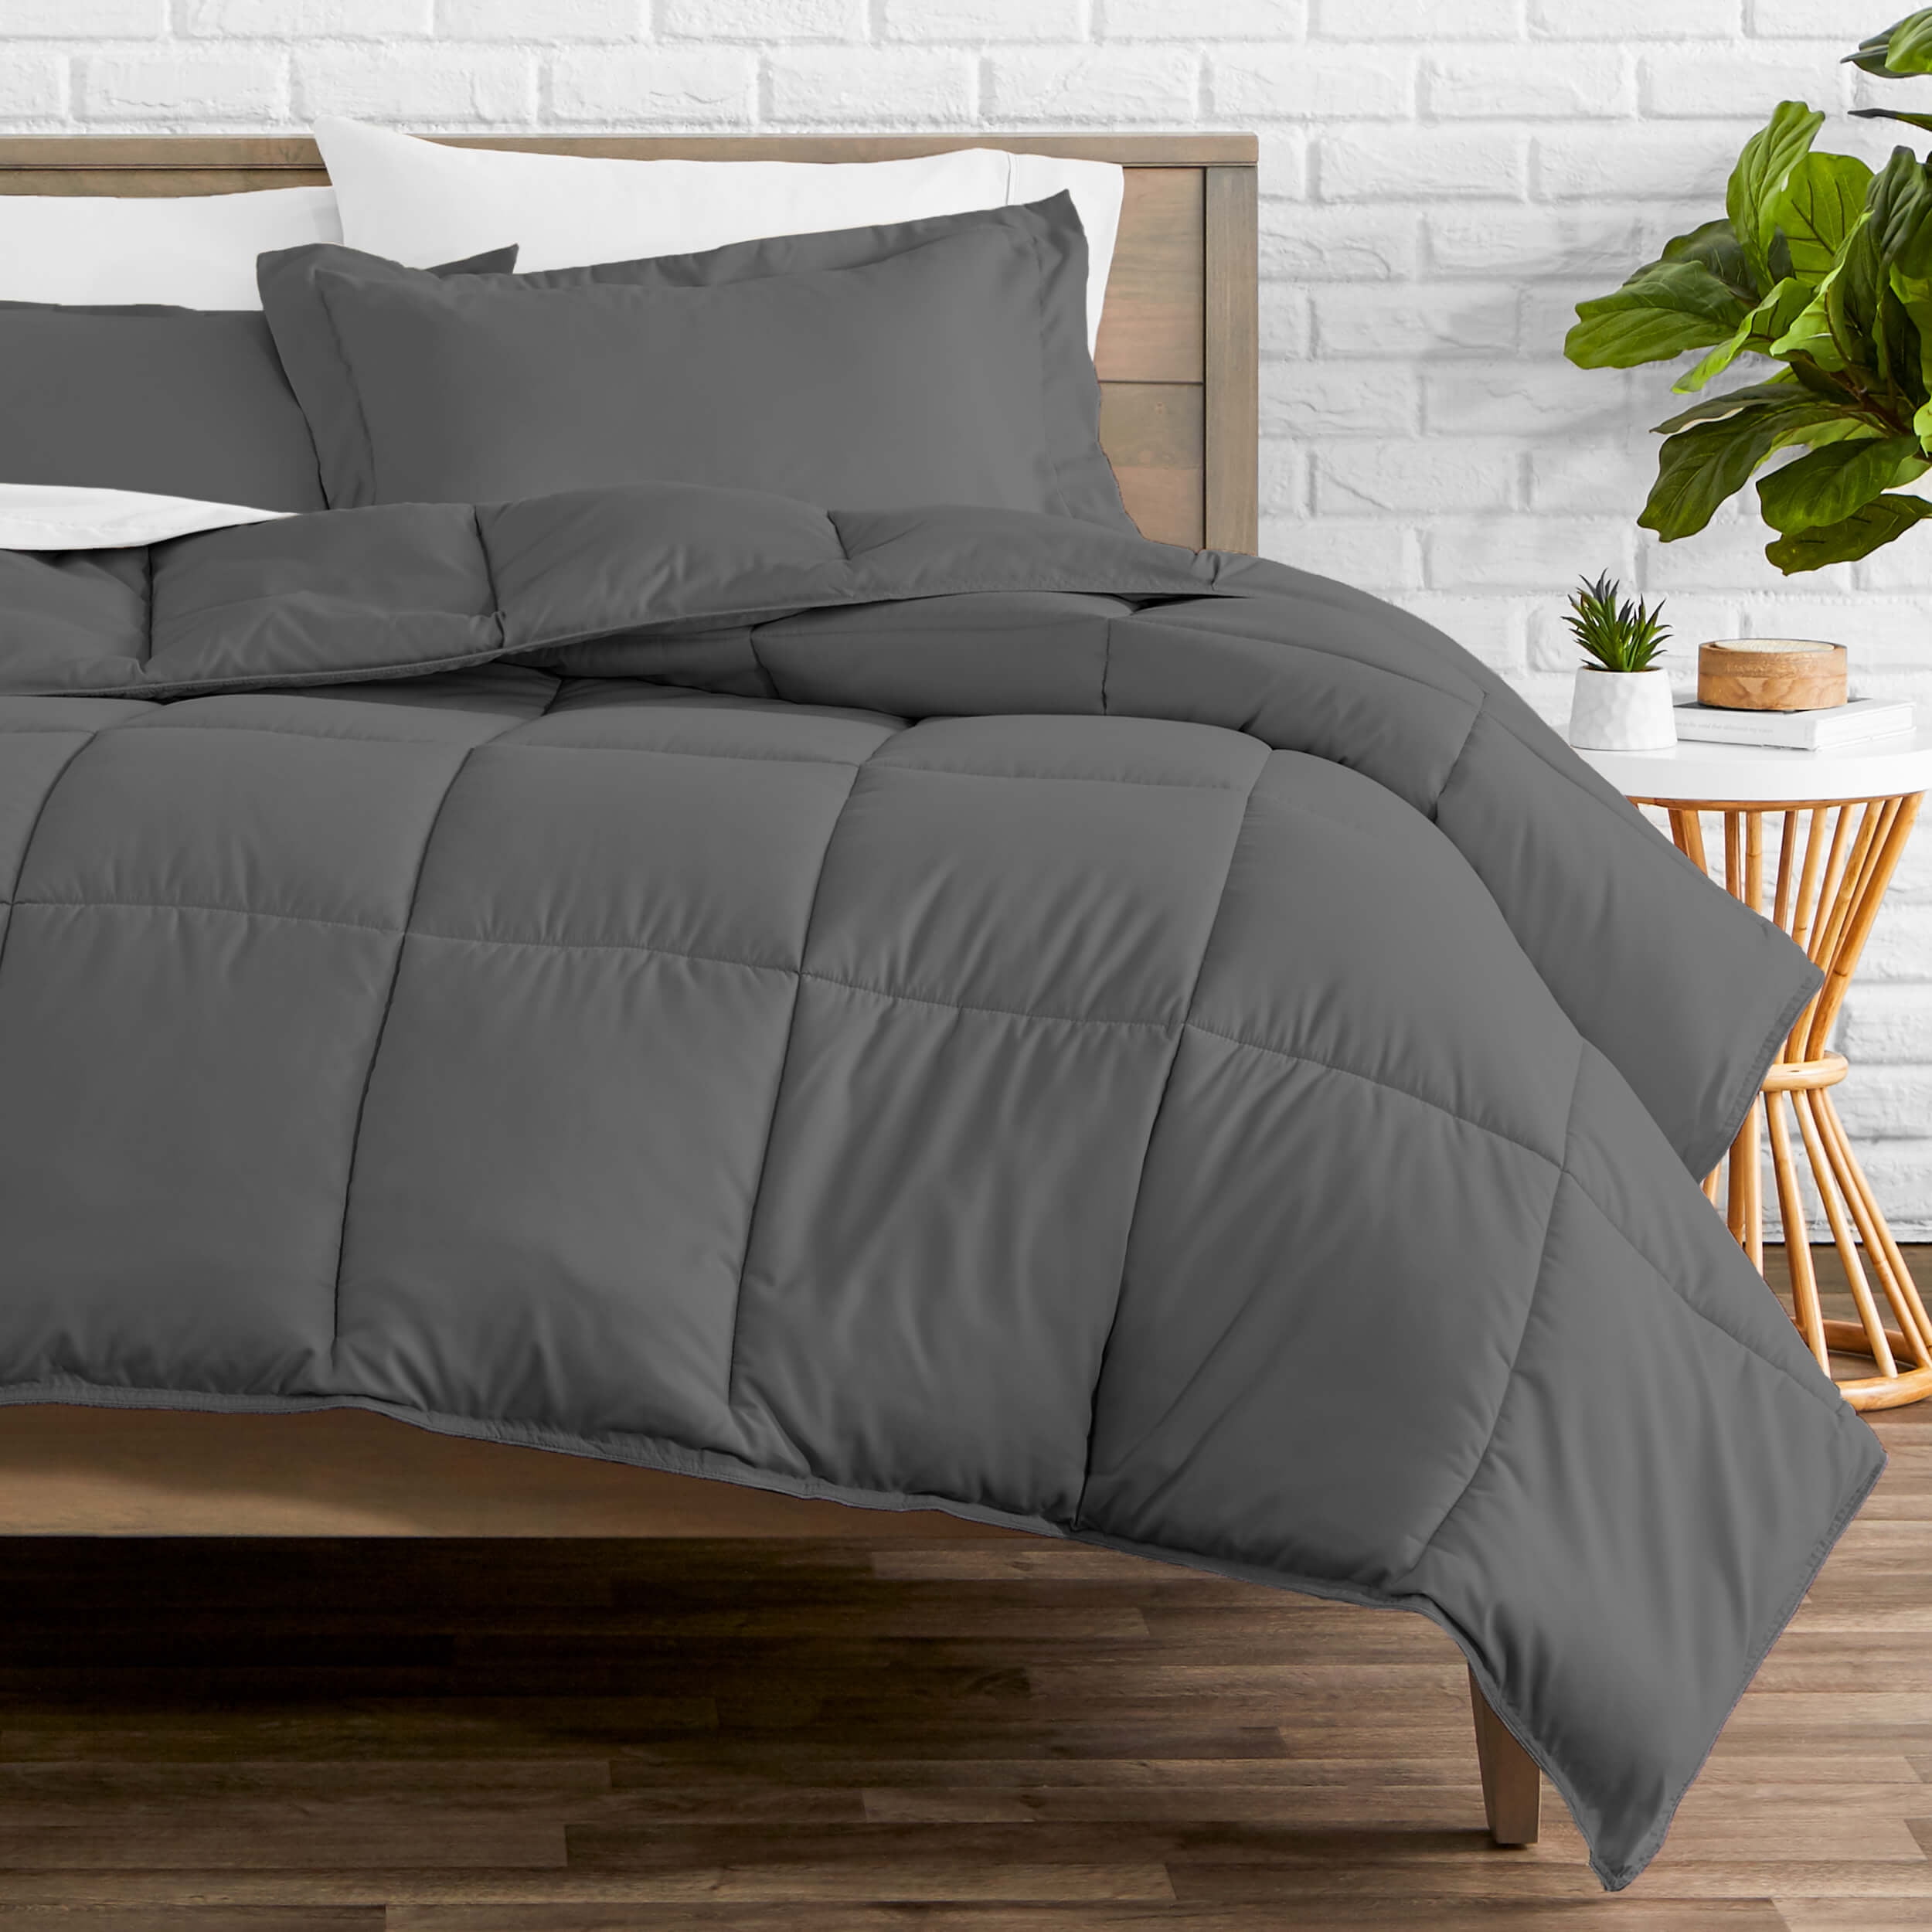 All Season Warmth Bare Home Comforter Set Full Size Ultra-Soft Goose Down Alternative Full, Dark Blue Premium 1800 Series